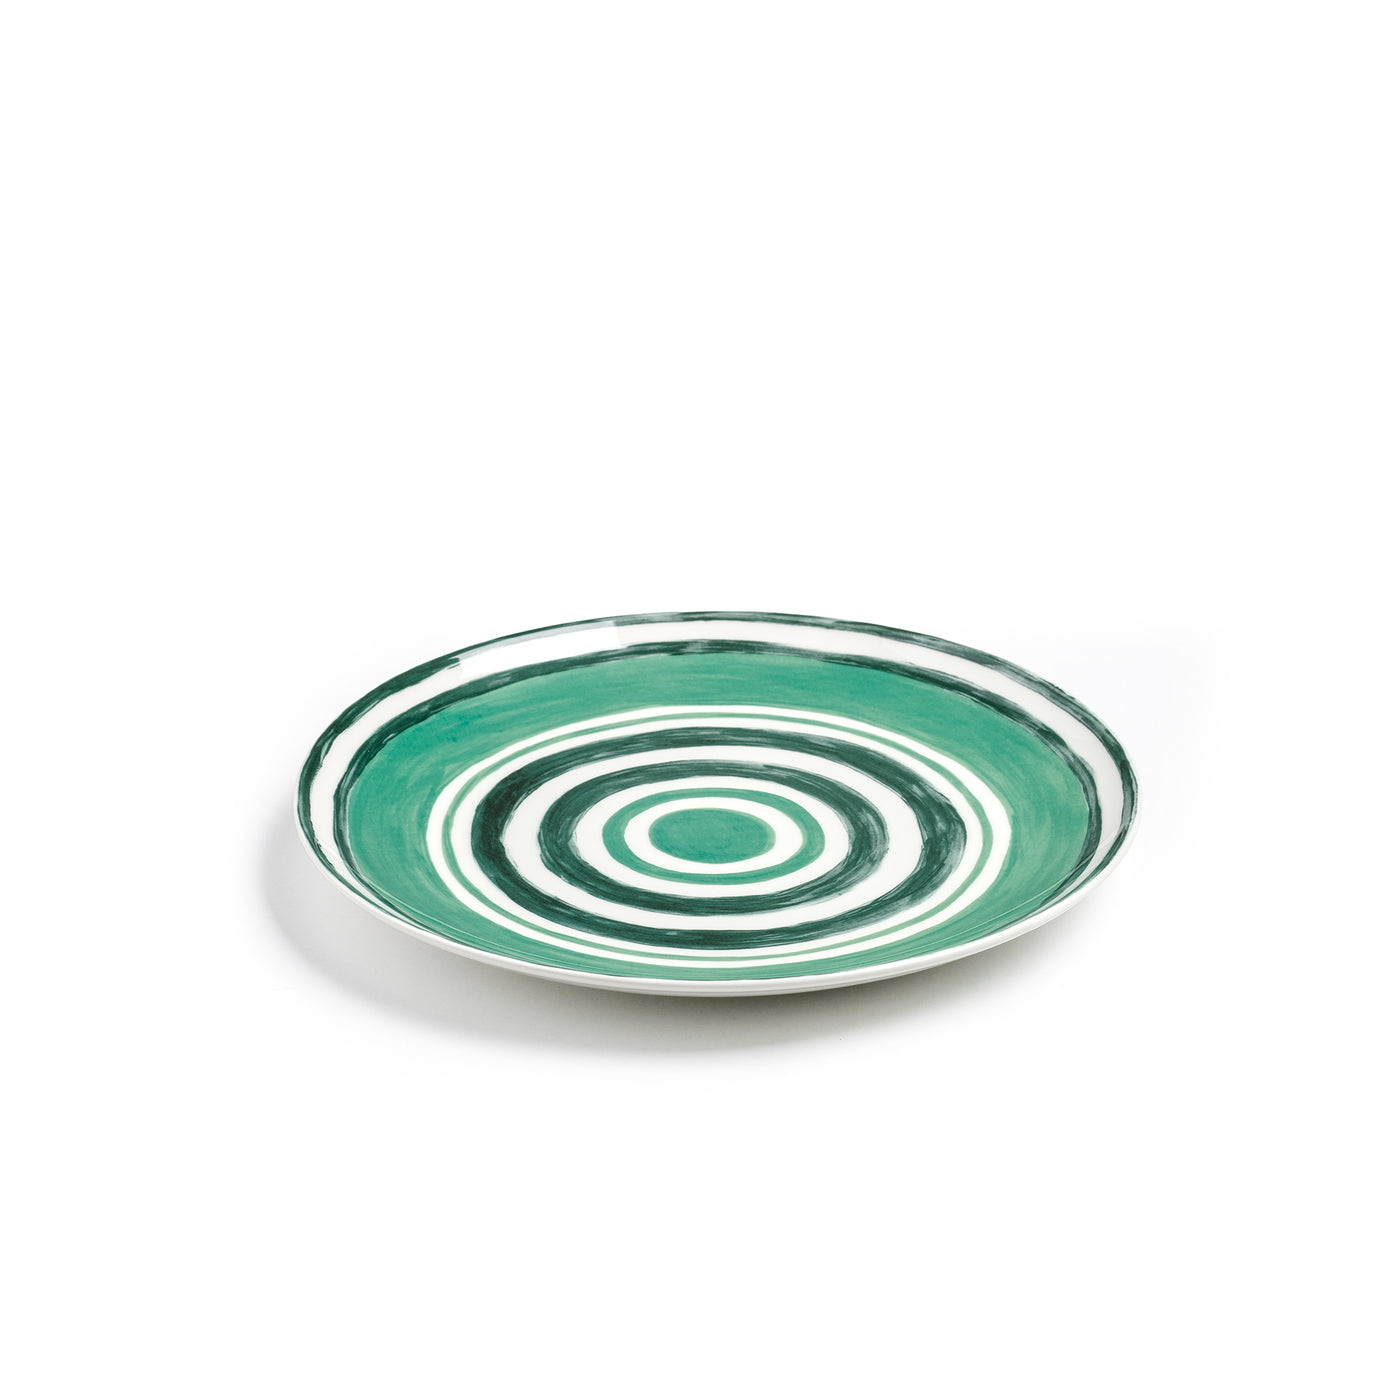 Maze Dinner Plate in Green